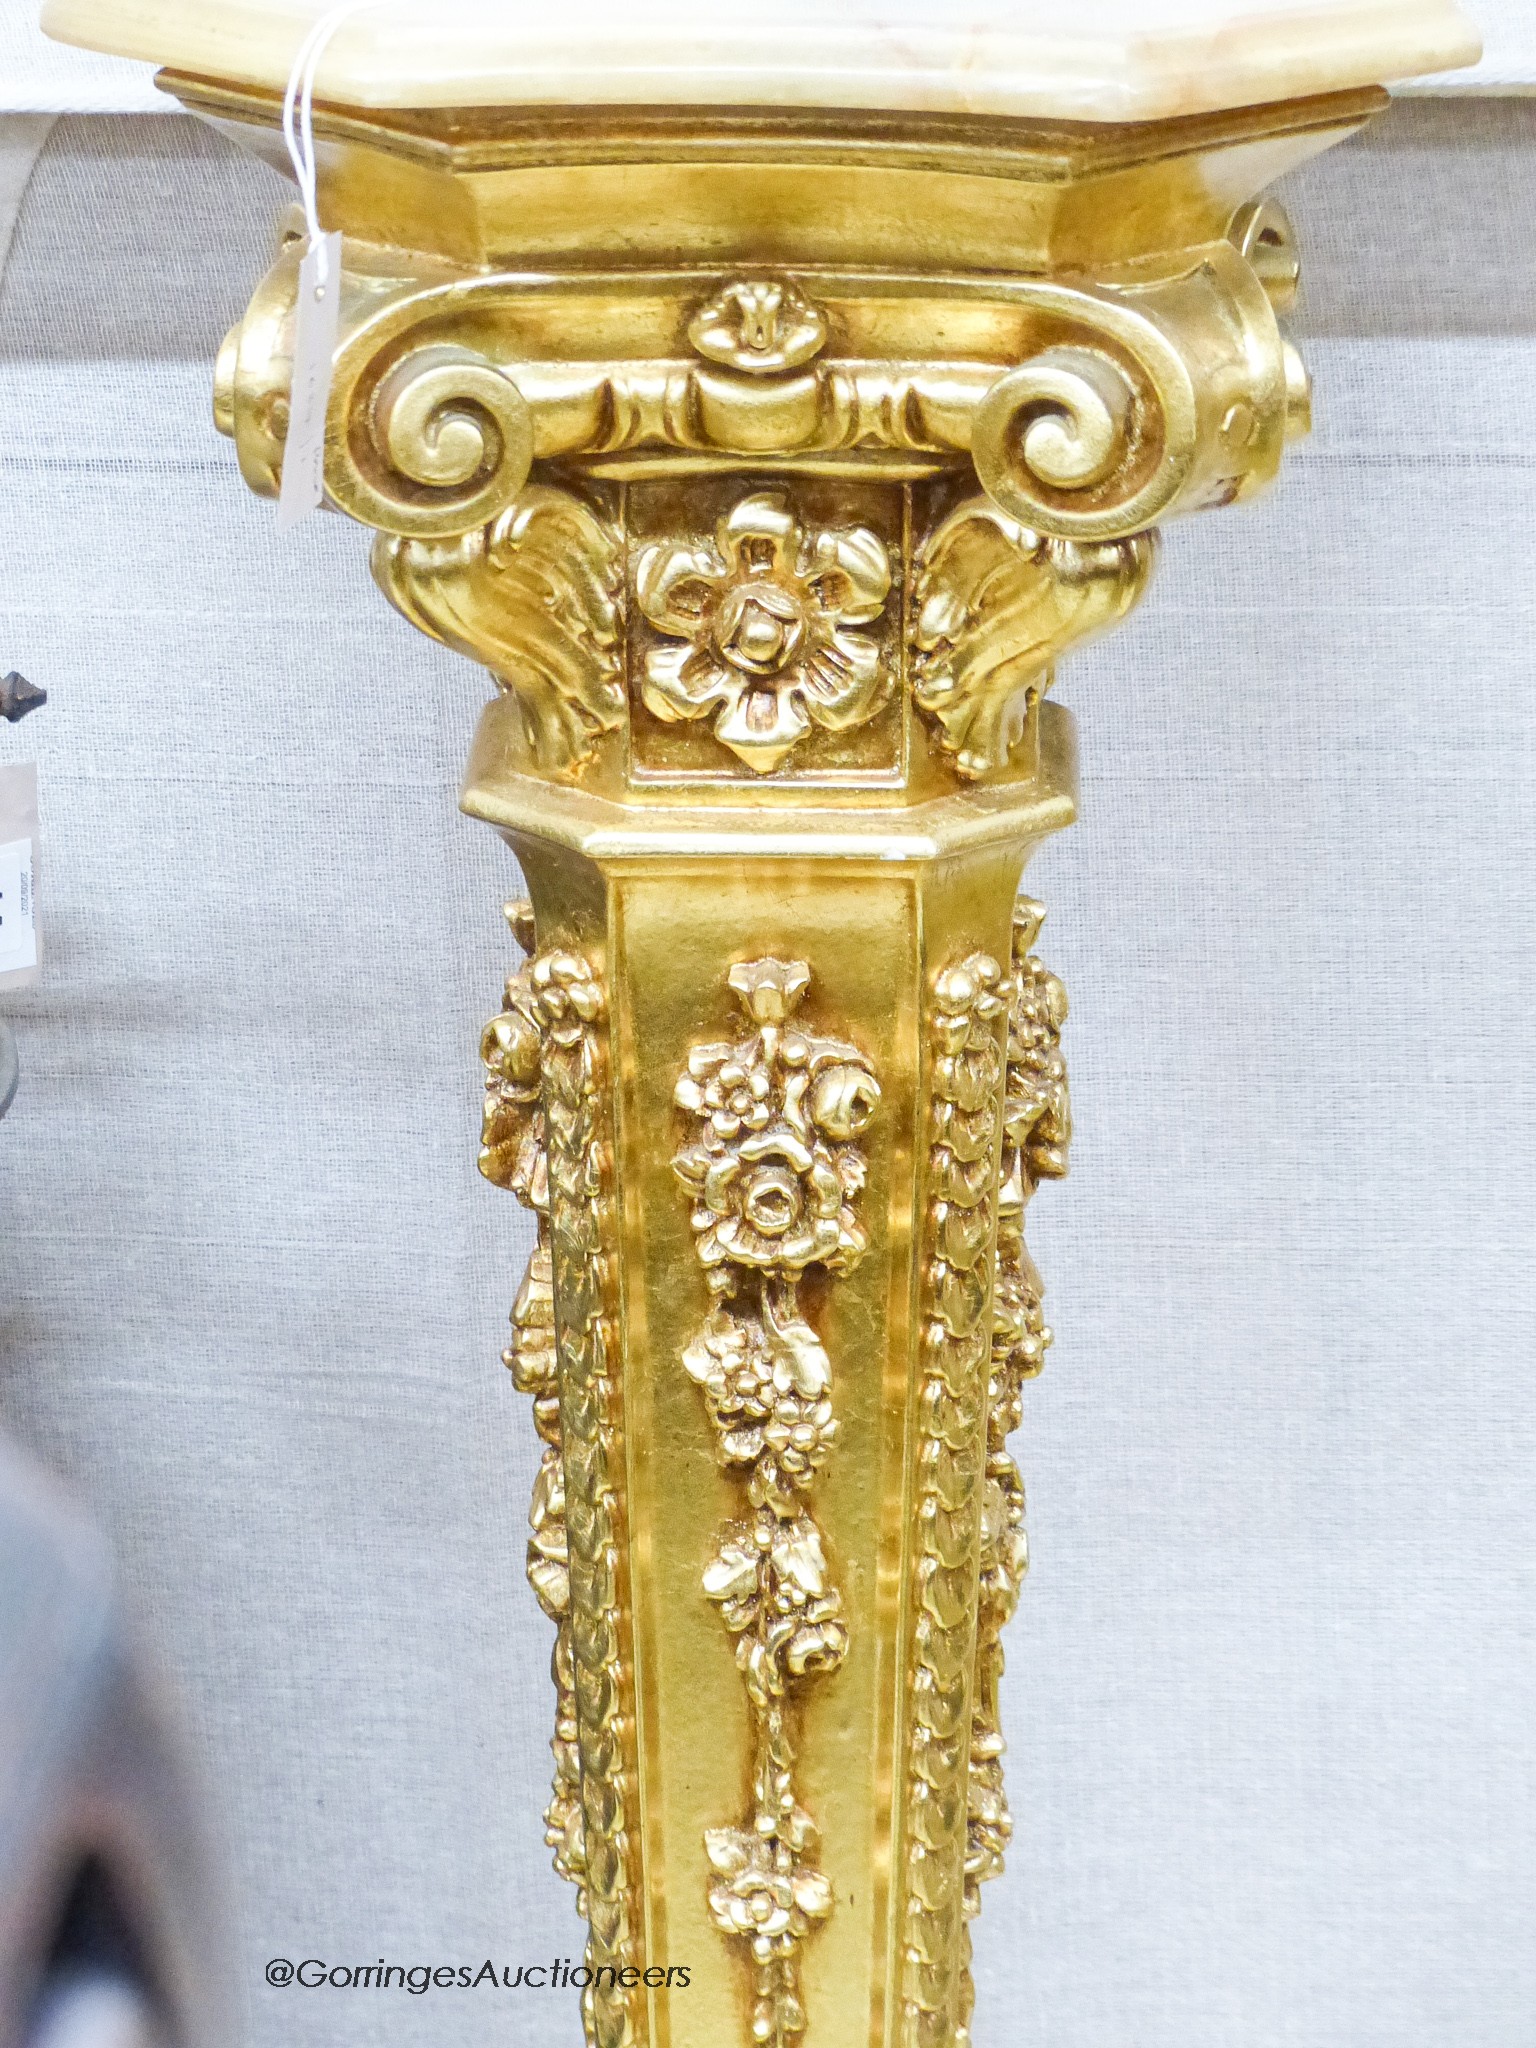 A pair of onyx top gilt pedestals, height 98cm